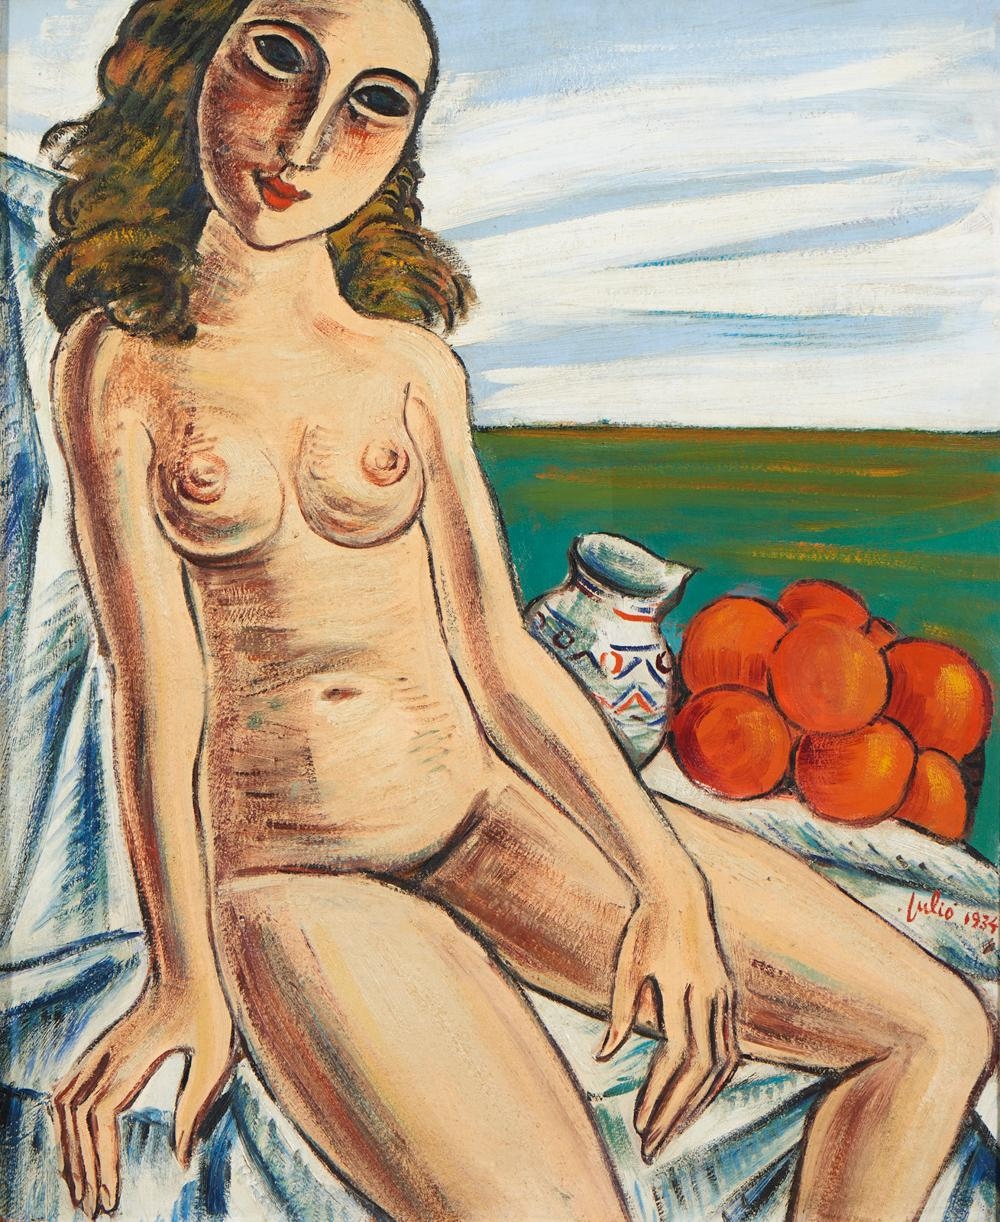 Female nude with oranges and jug by Júlio Reis Pereira, 1934